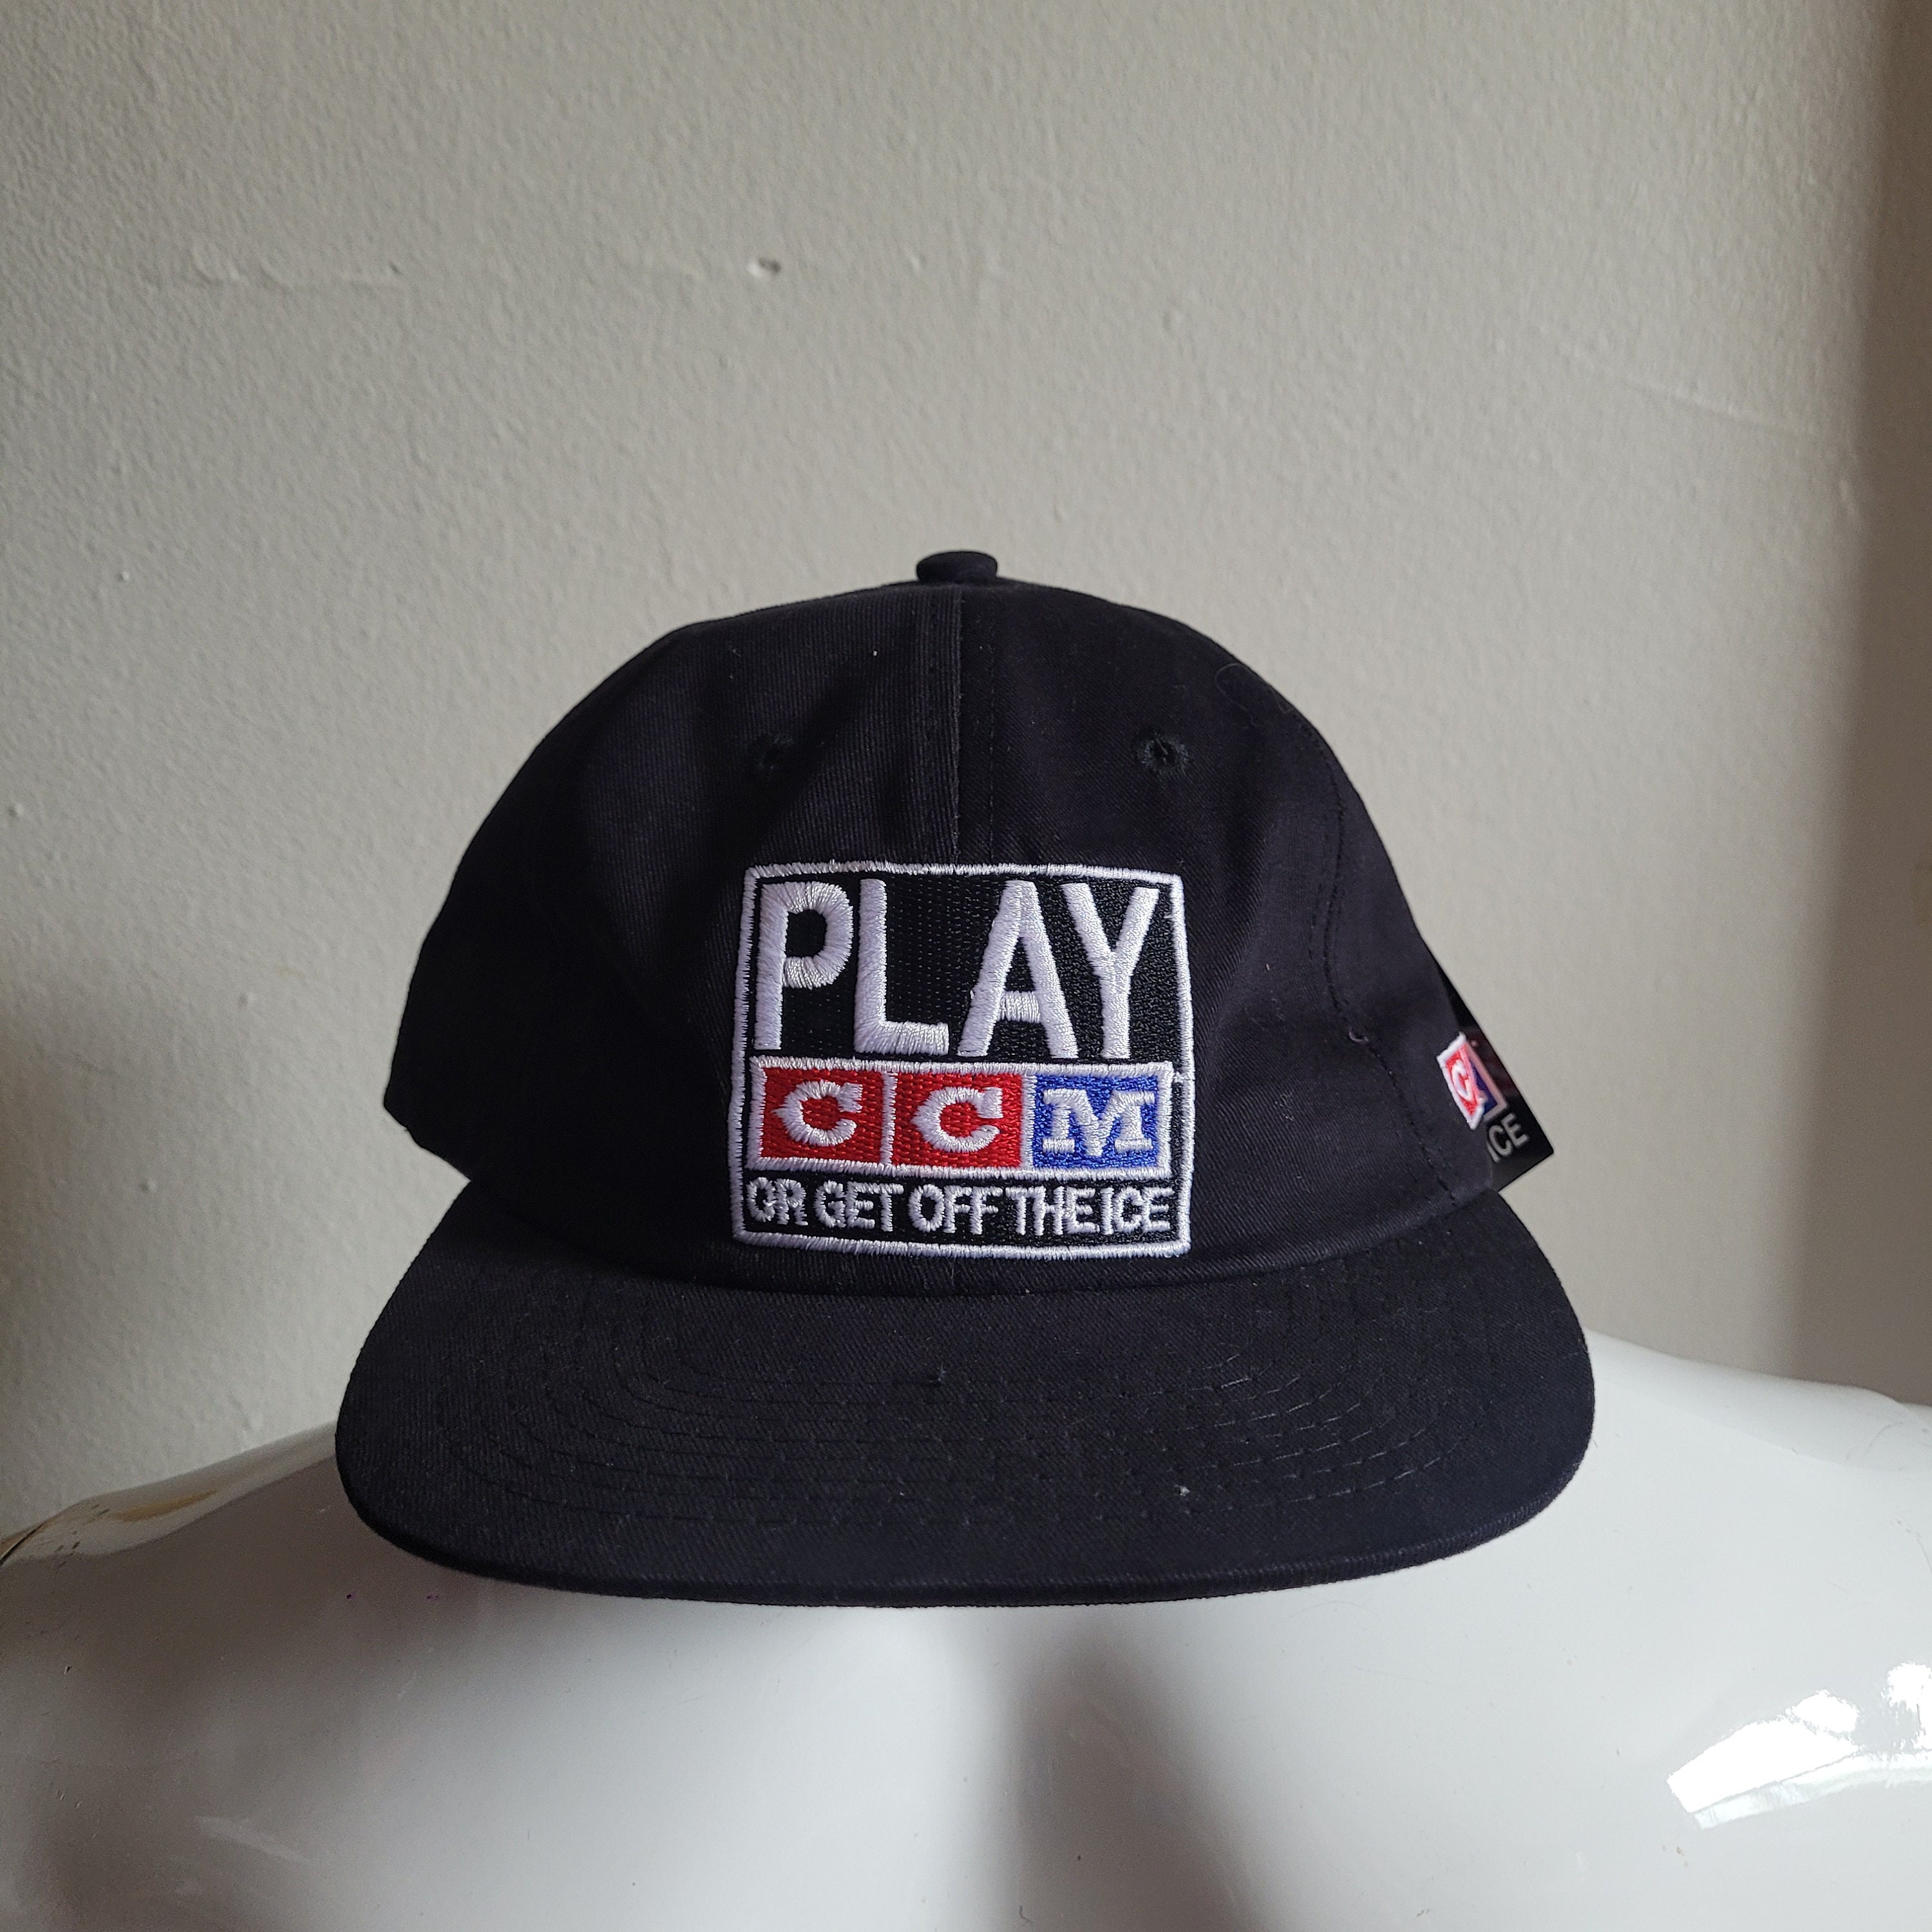 Florida Panthers 90’s NHL Hockey Snapback Hat by Pro Player